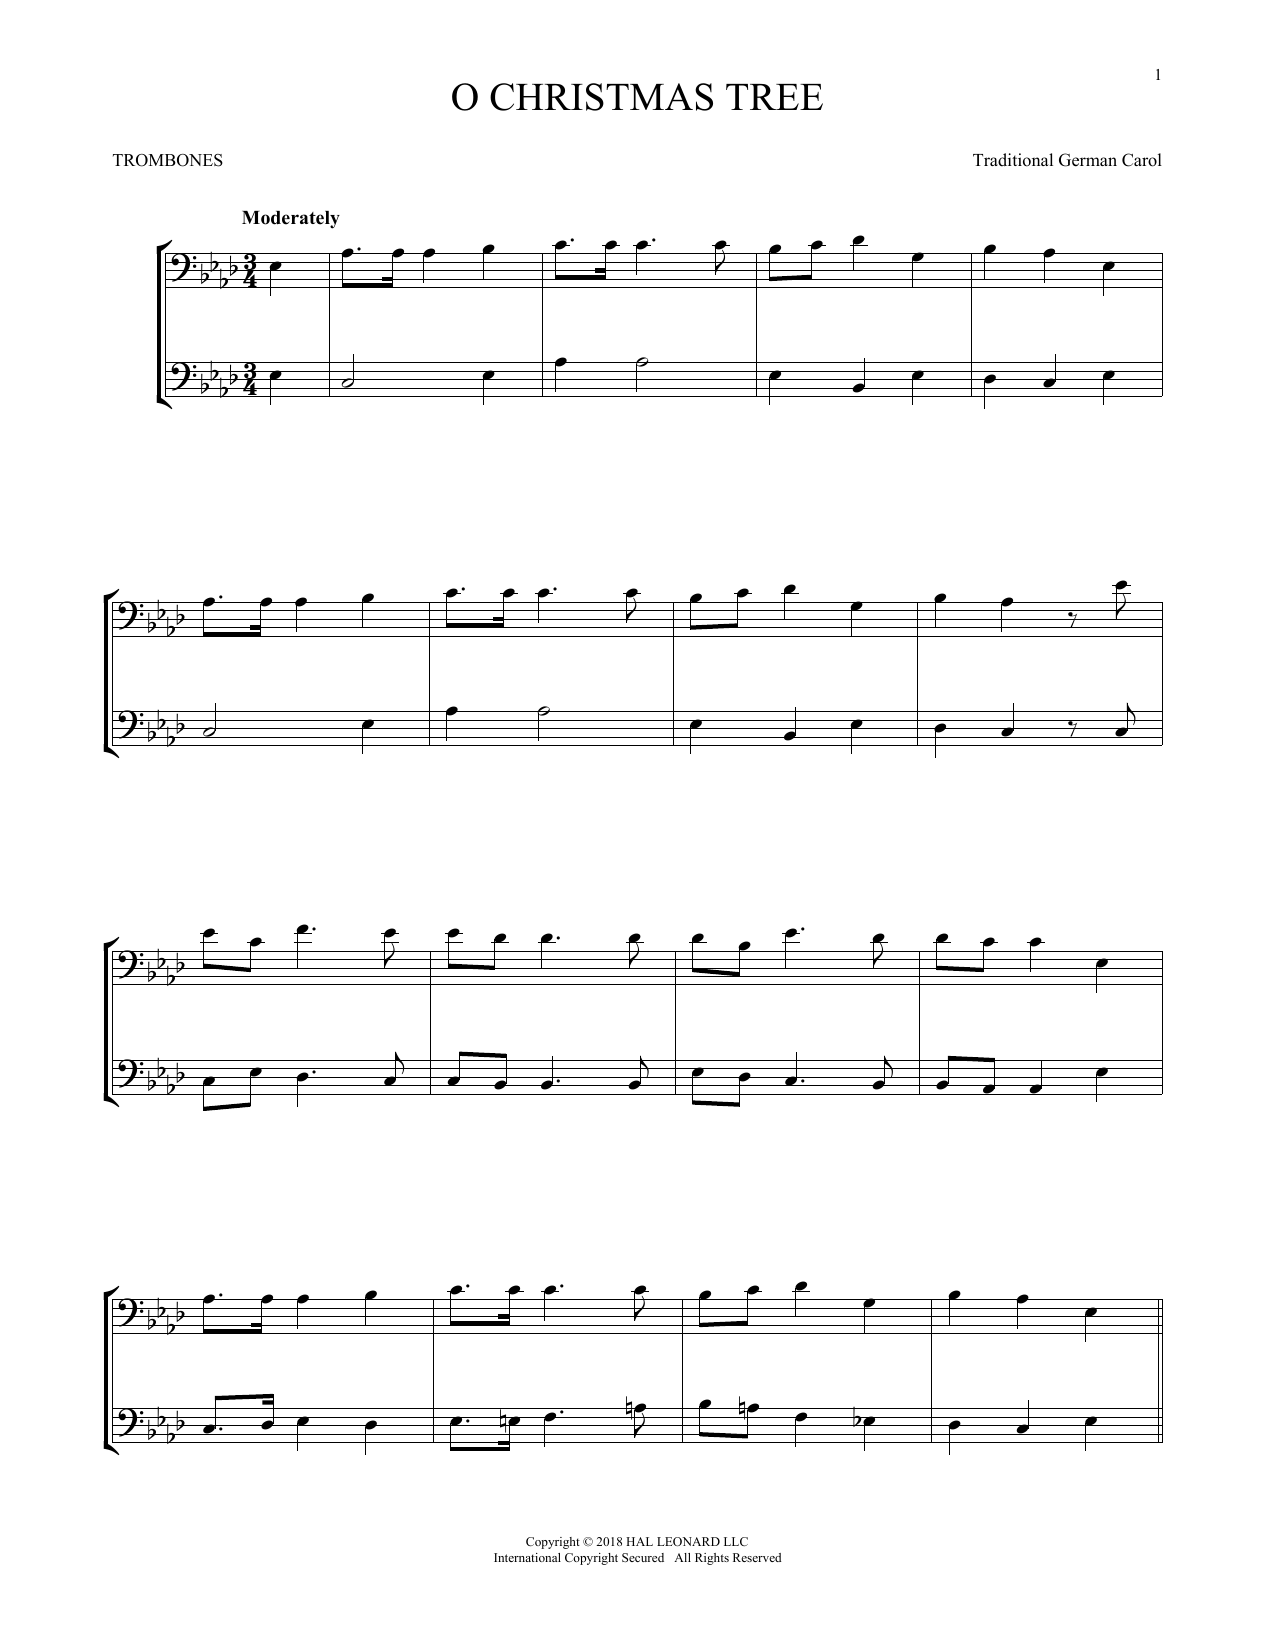 O Christmas Tree (Trombone Transcription) von Traditional German Carol